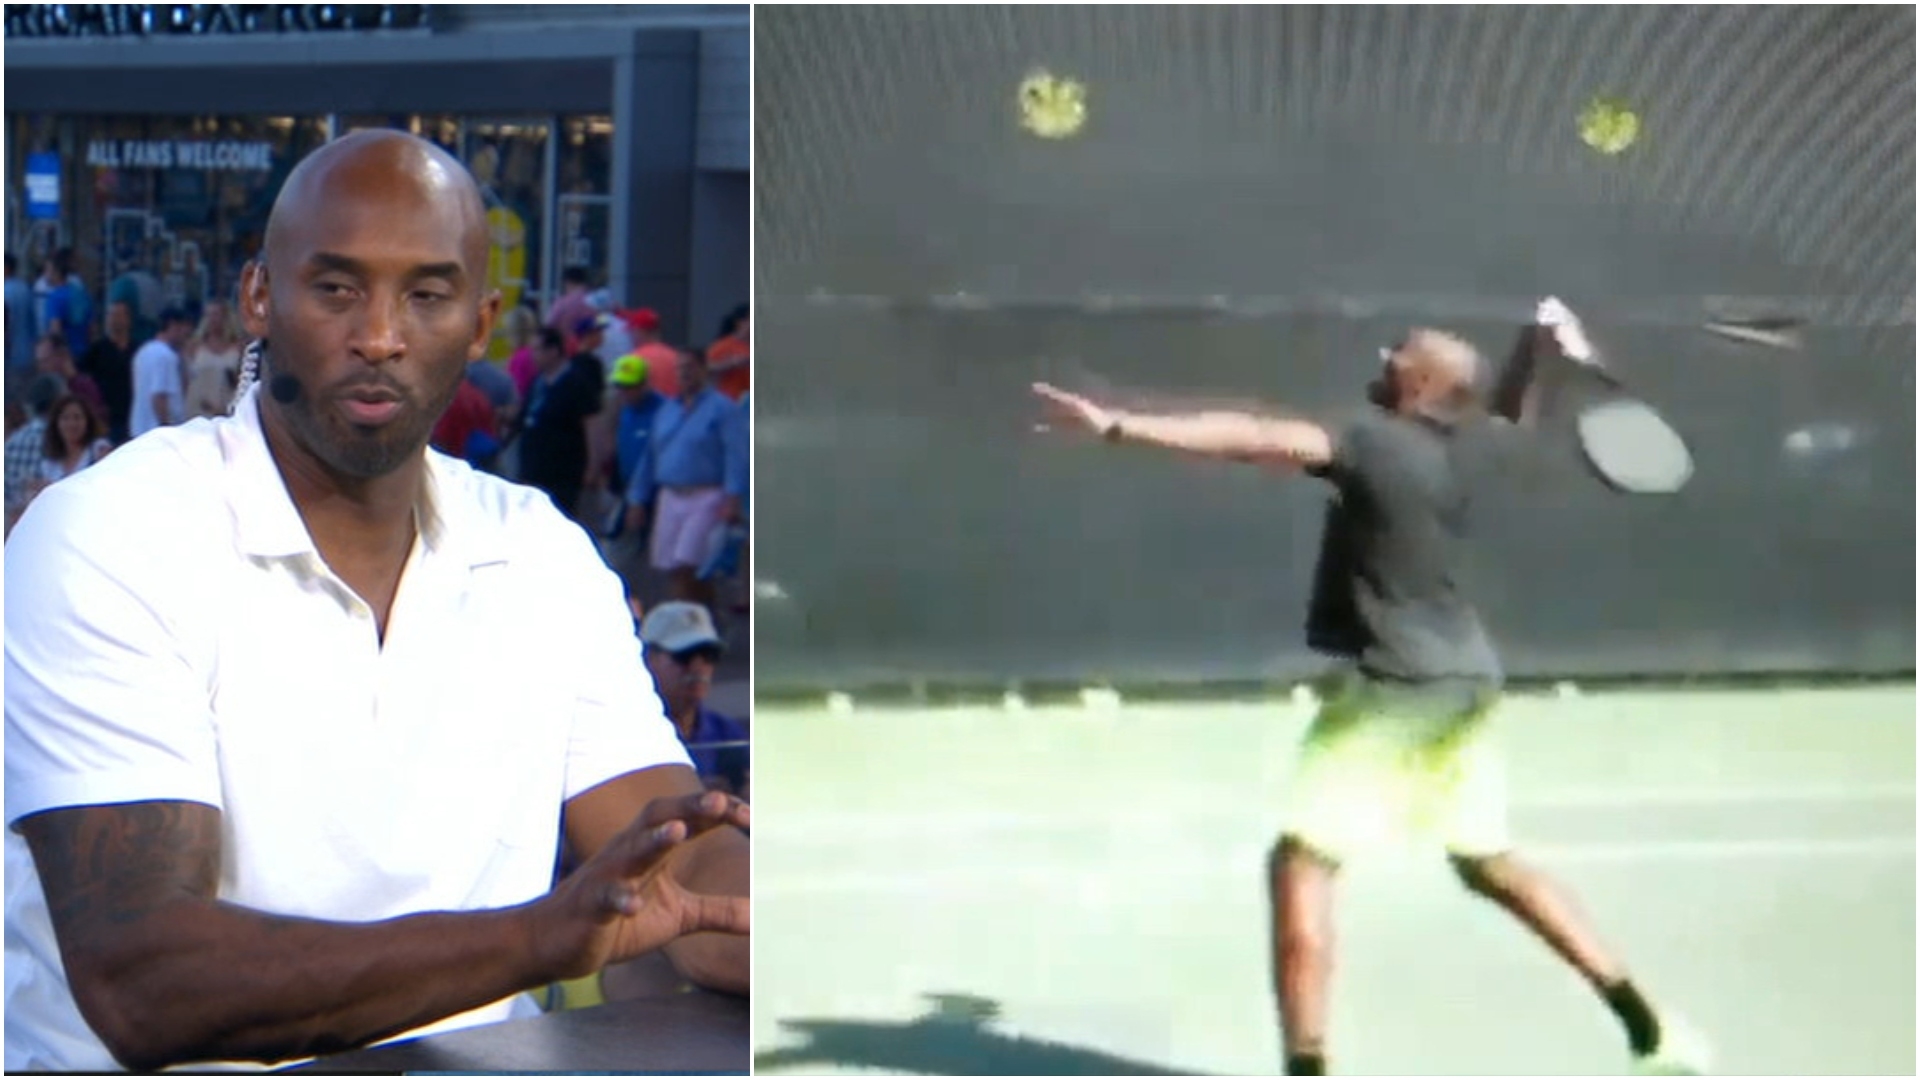 Kobe exploring tennis in retirement - Stream the Video